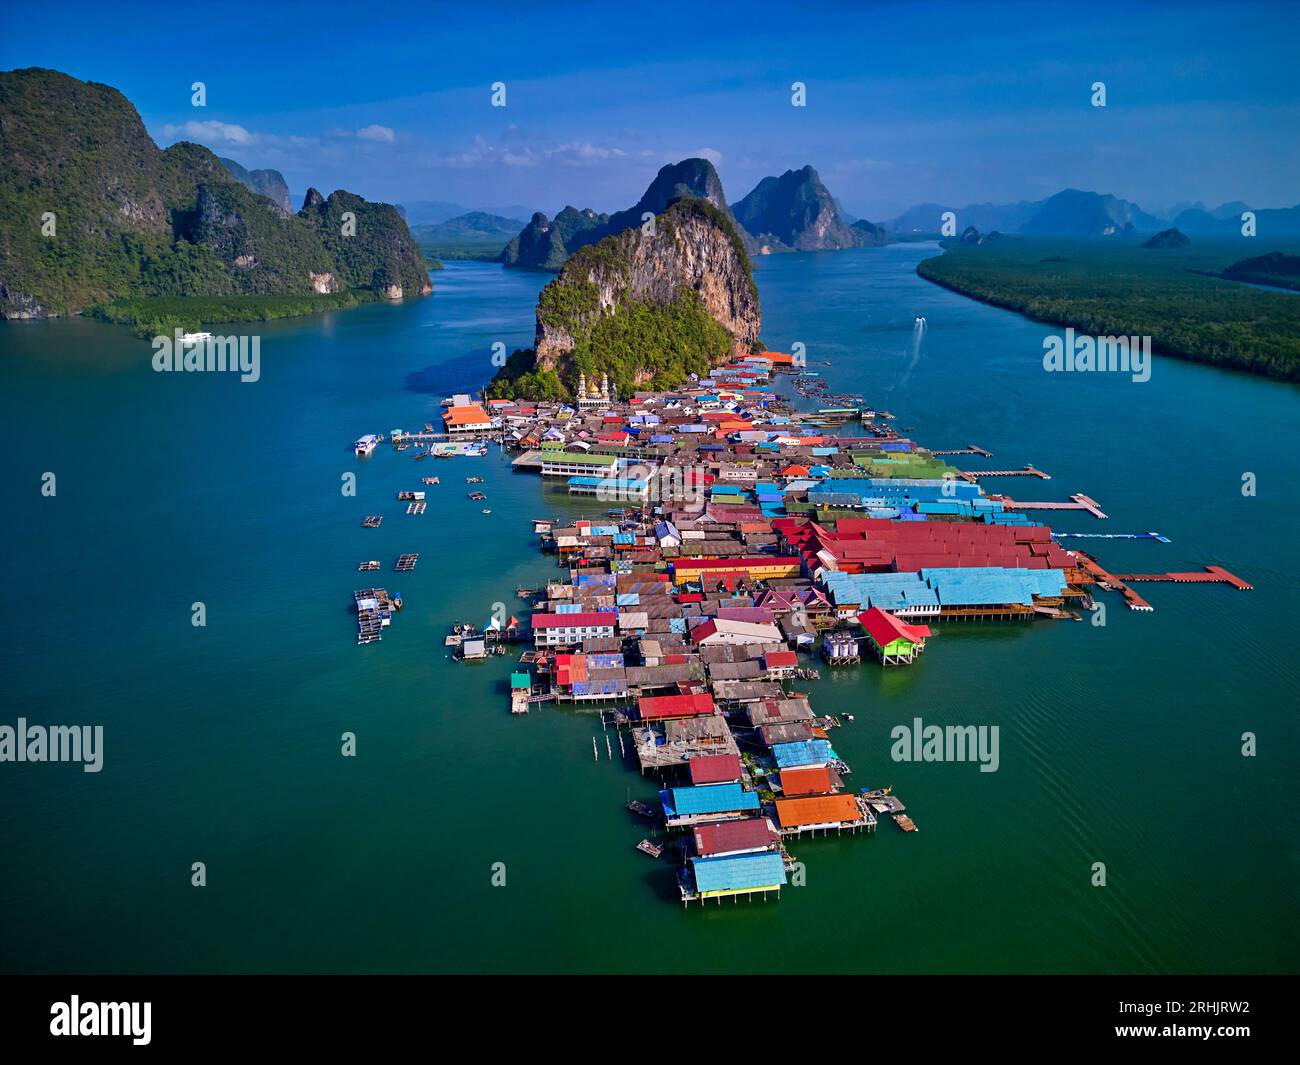 Thailandia, baia di Phang Nga, parco nazionale di Ao Phang Nga, vista aerea del villaggio di pescatori musulmani in flotting di Ko Panyee Foto Stock